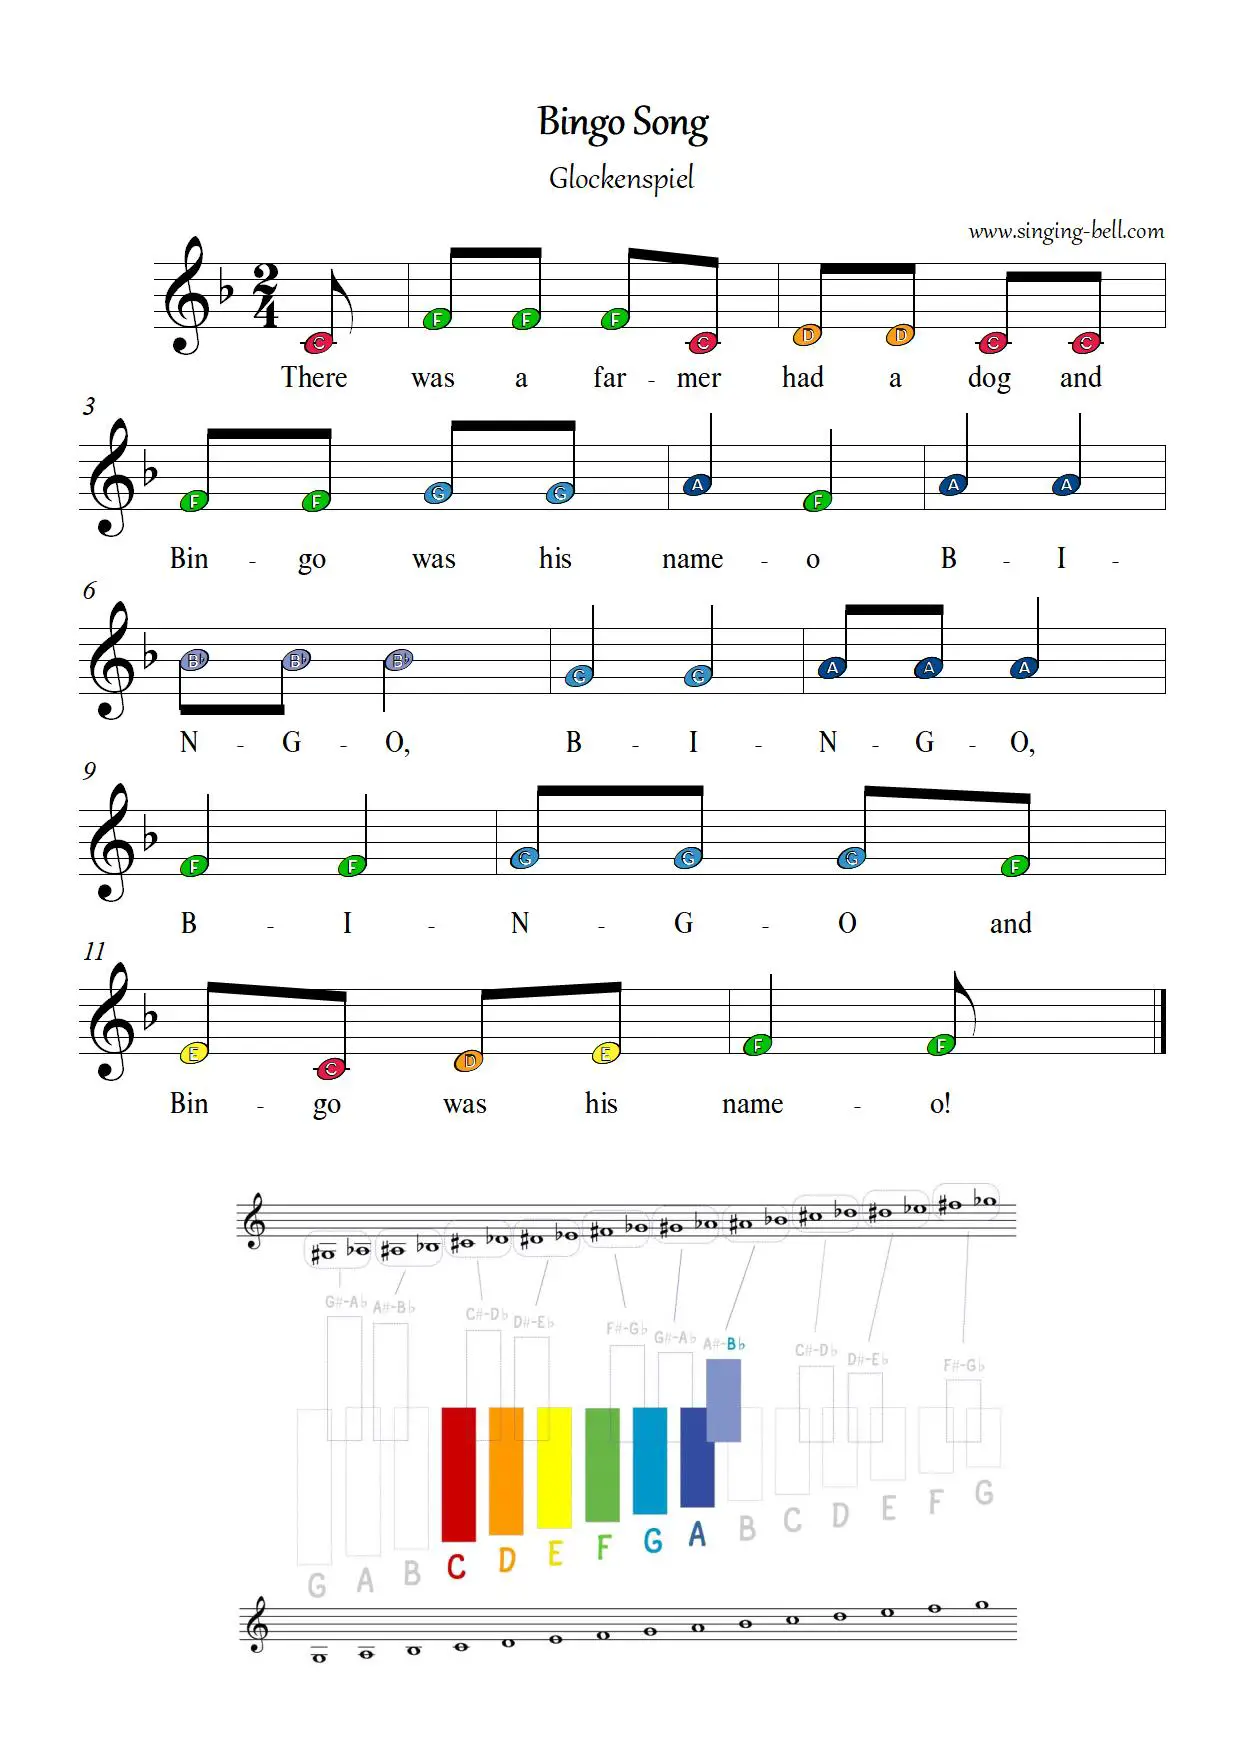 Bingo Song free xylophone glockenspiel sheet music color notes chart pdf